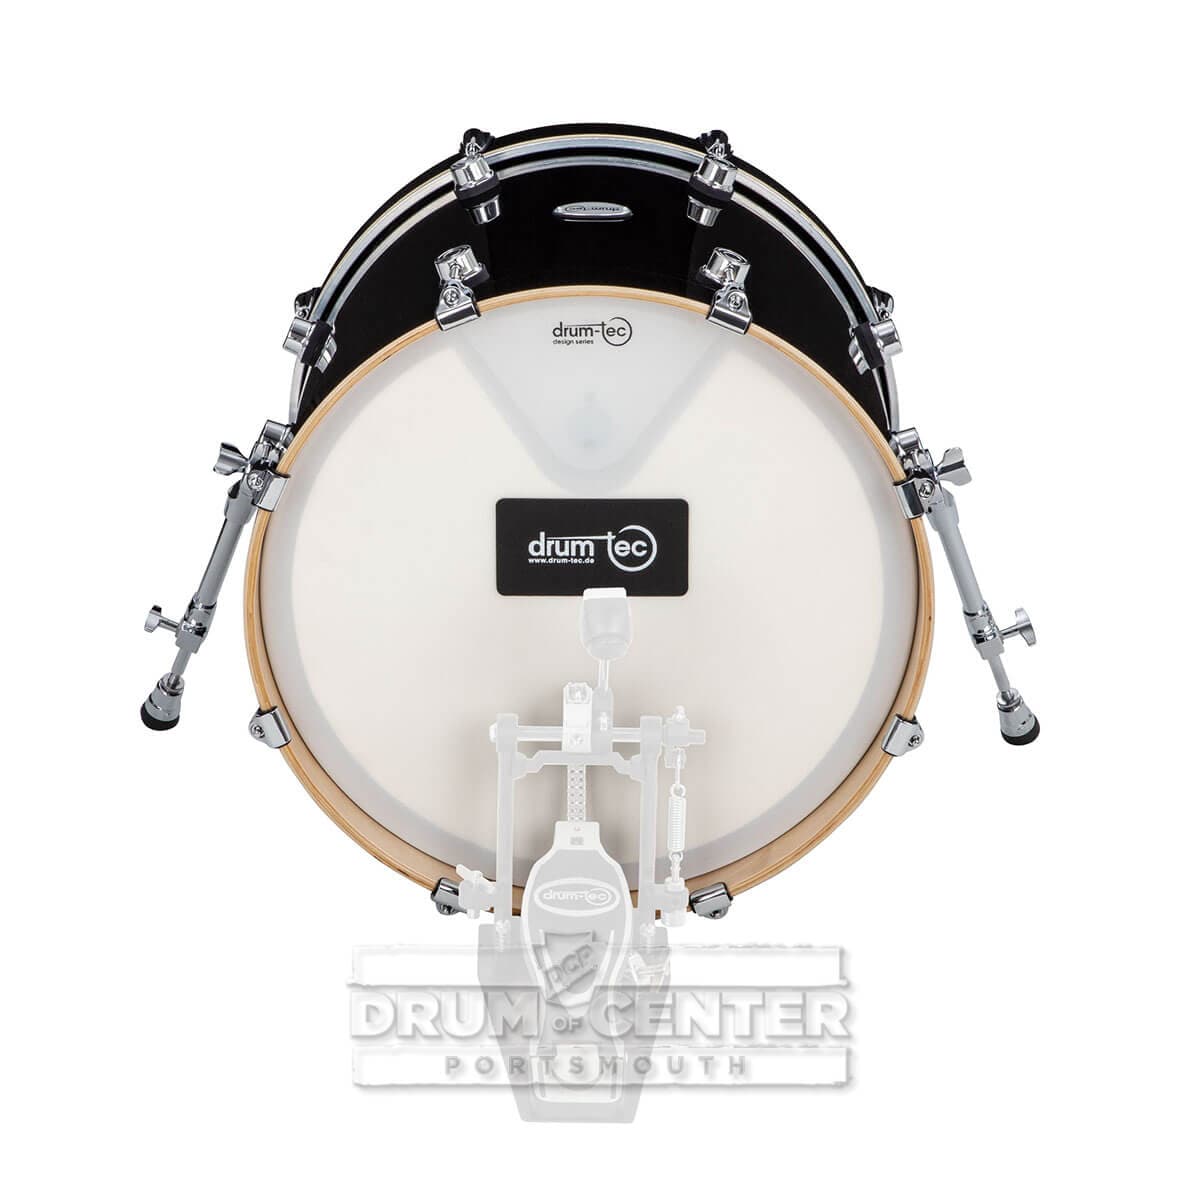 Drum-Tec Pro 3 Series E-Bass Drum 20x16 Piano Black